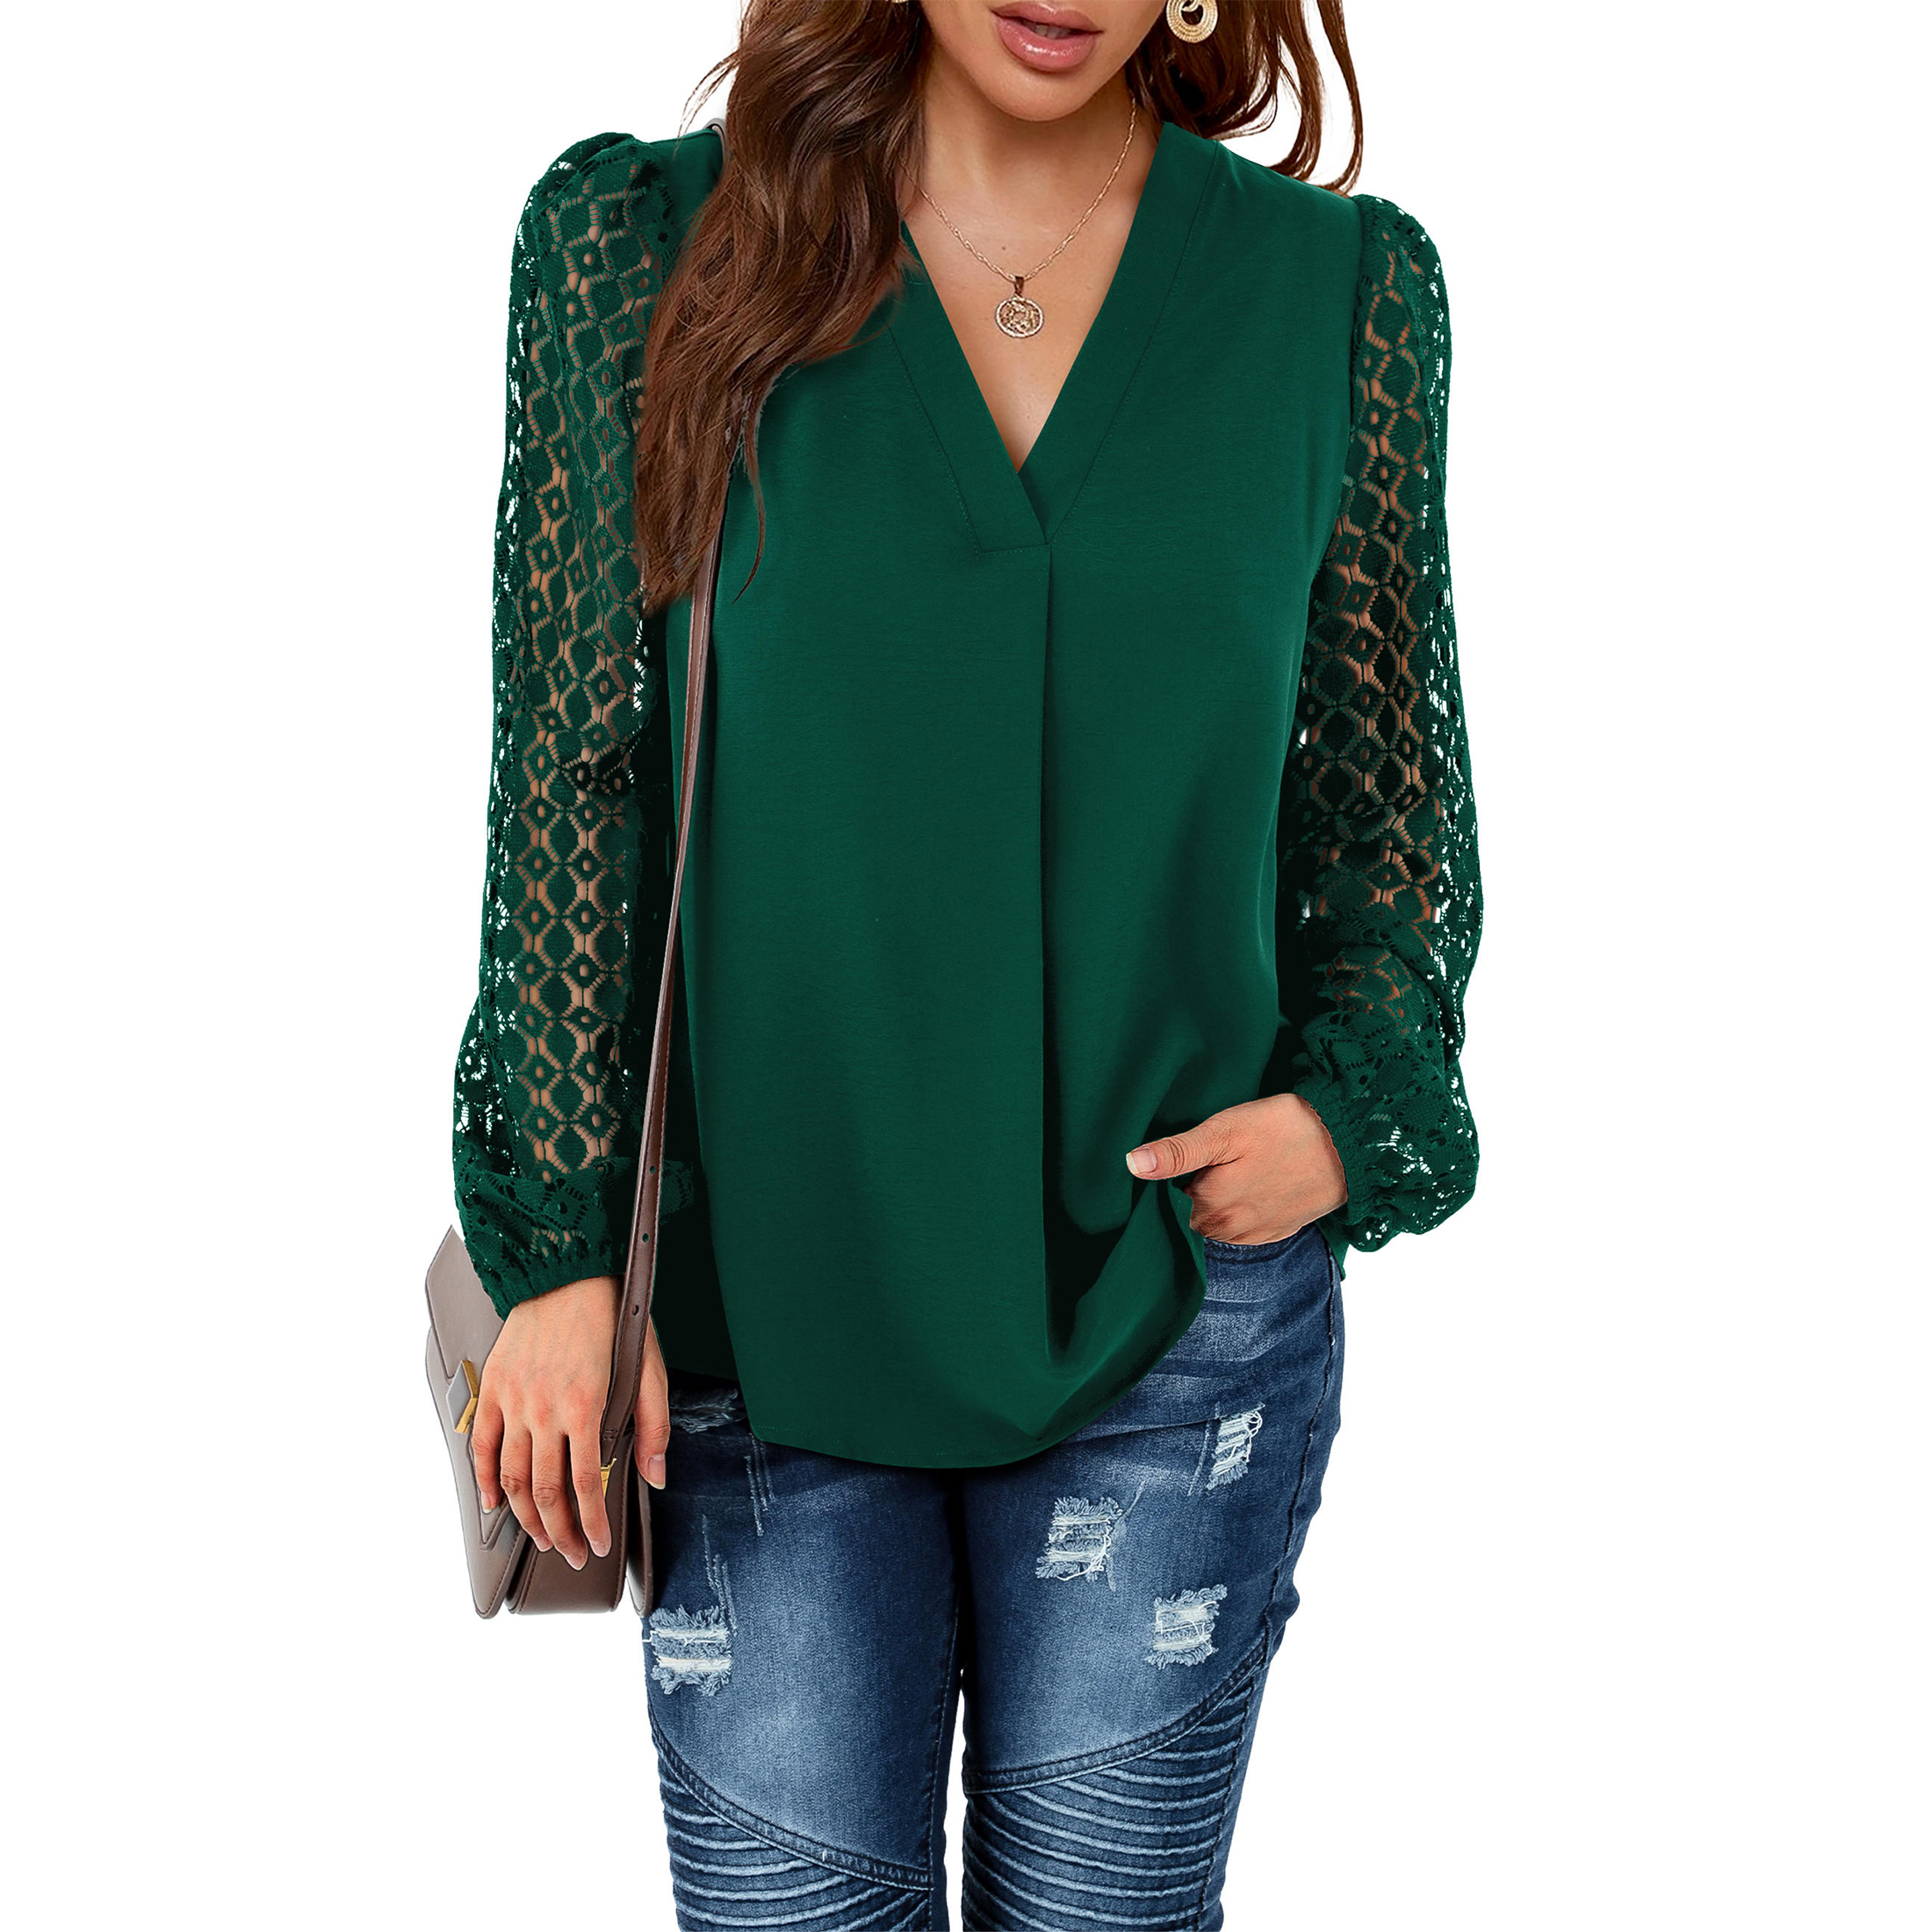 Amoretu Womens Shirts Casual V Neck Long Sleeve Blouses Plain Tops Green L - image 1 of 4